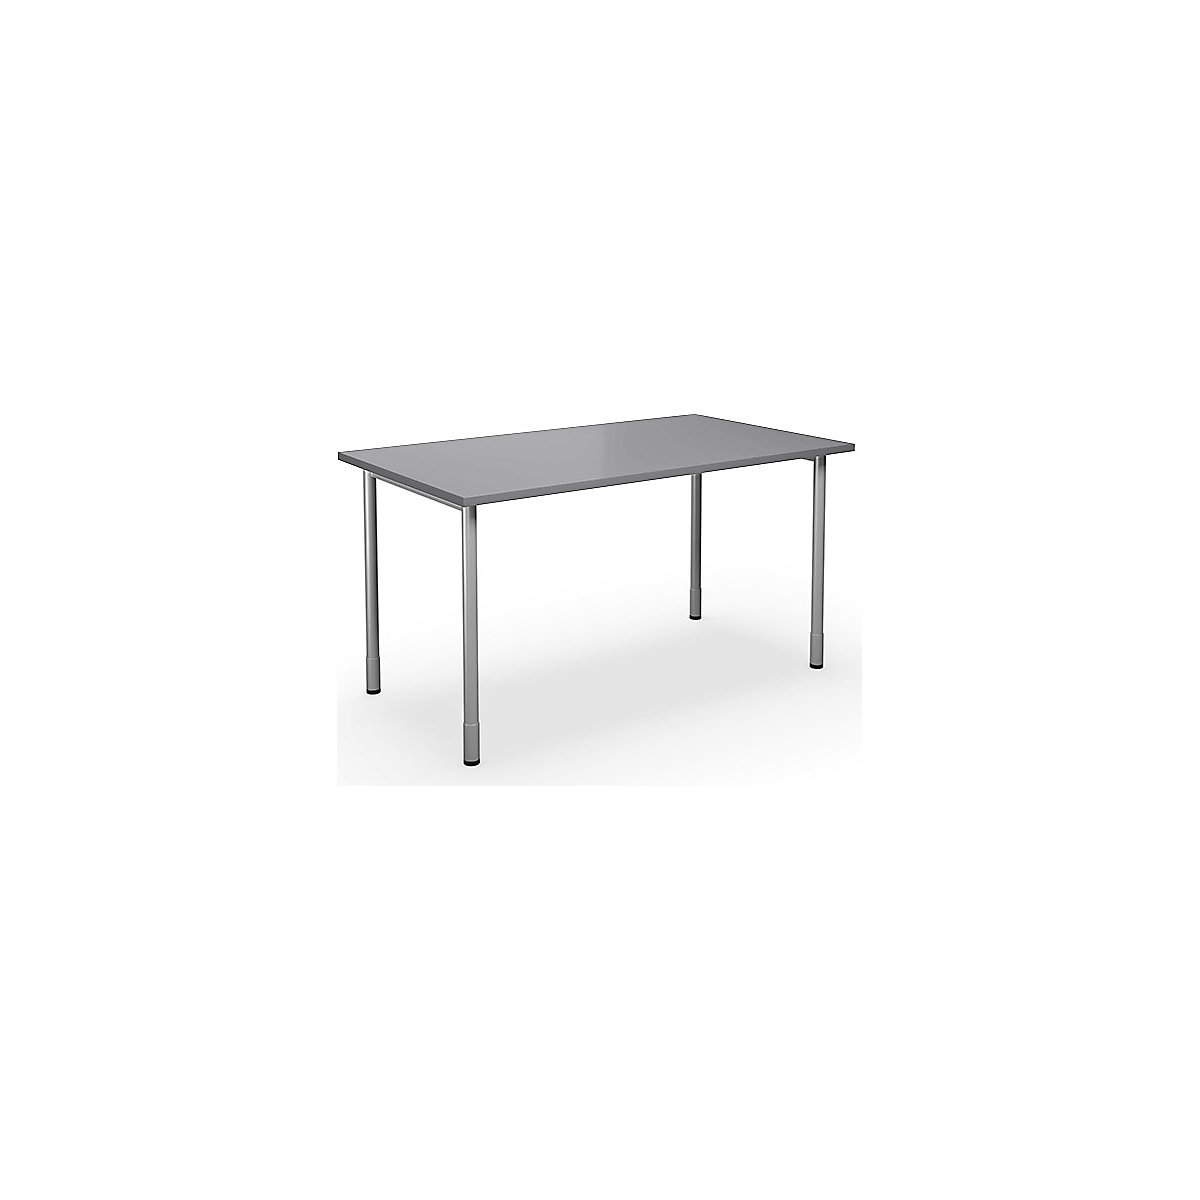 DUO-C multi-purpose desk, straight tabletop, WxD 1400 x 800 mm, light grey, silver-7